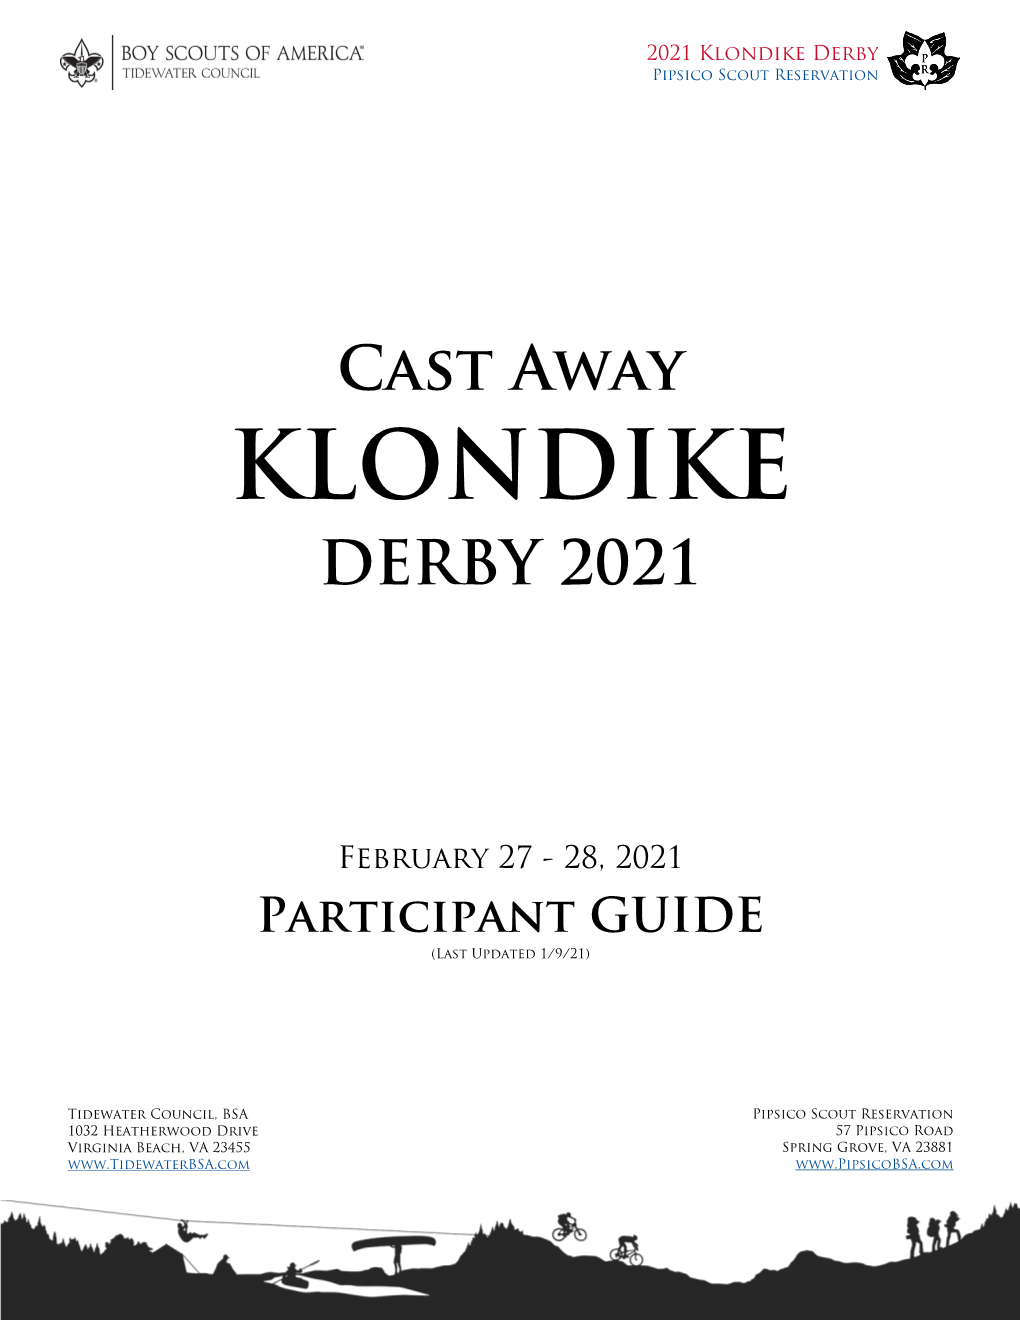 2021 Klondike Derby Pipsico Scout Reservation